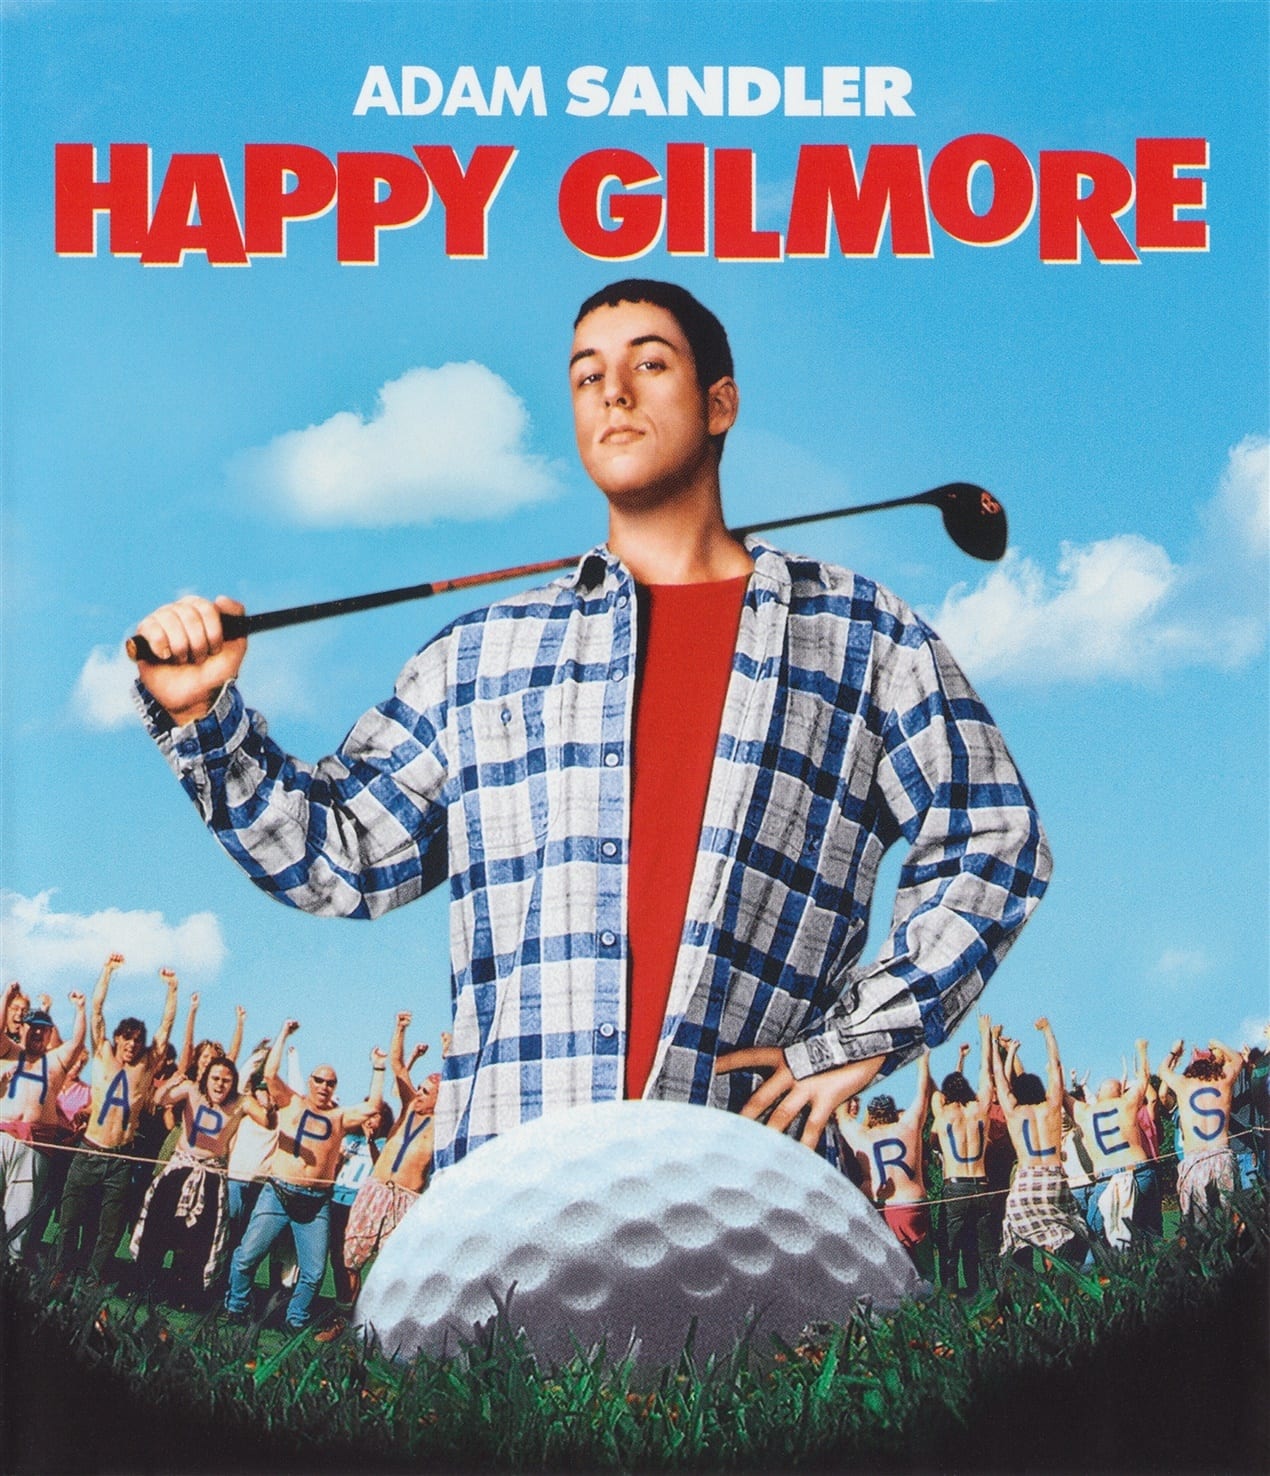 Happy Gilmore' was inspired by Adam Sandler's childhood friend